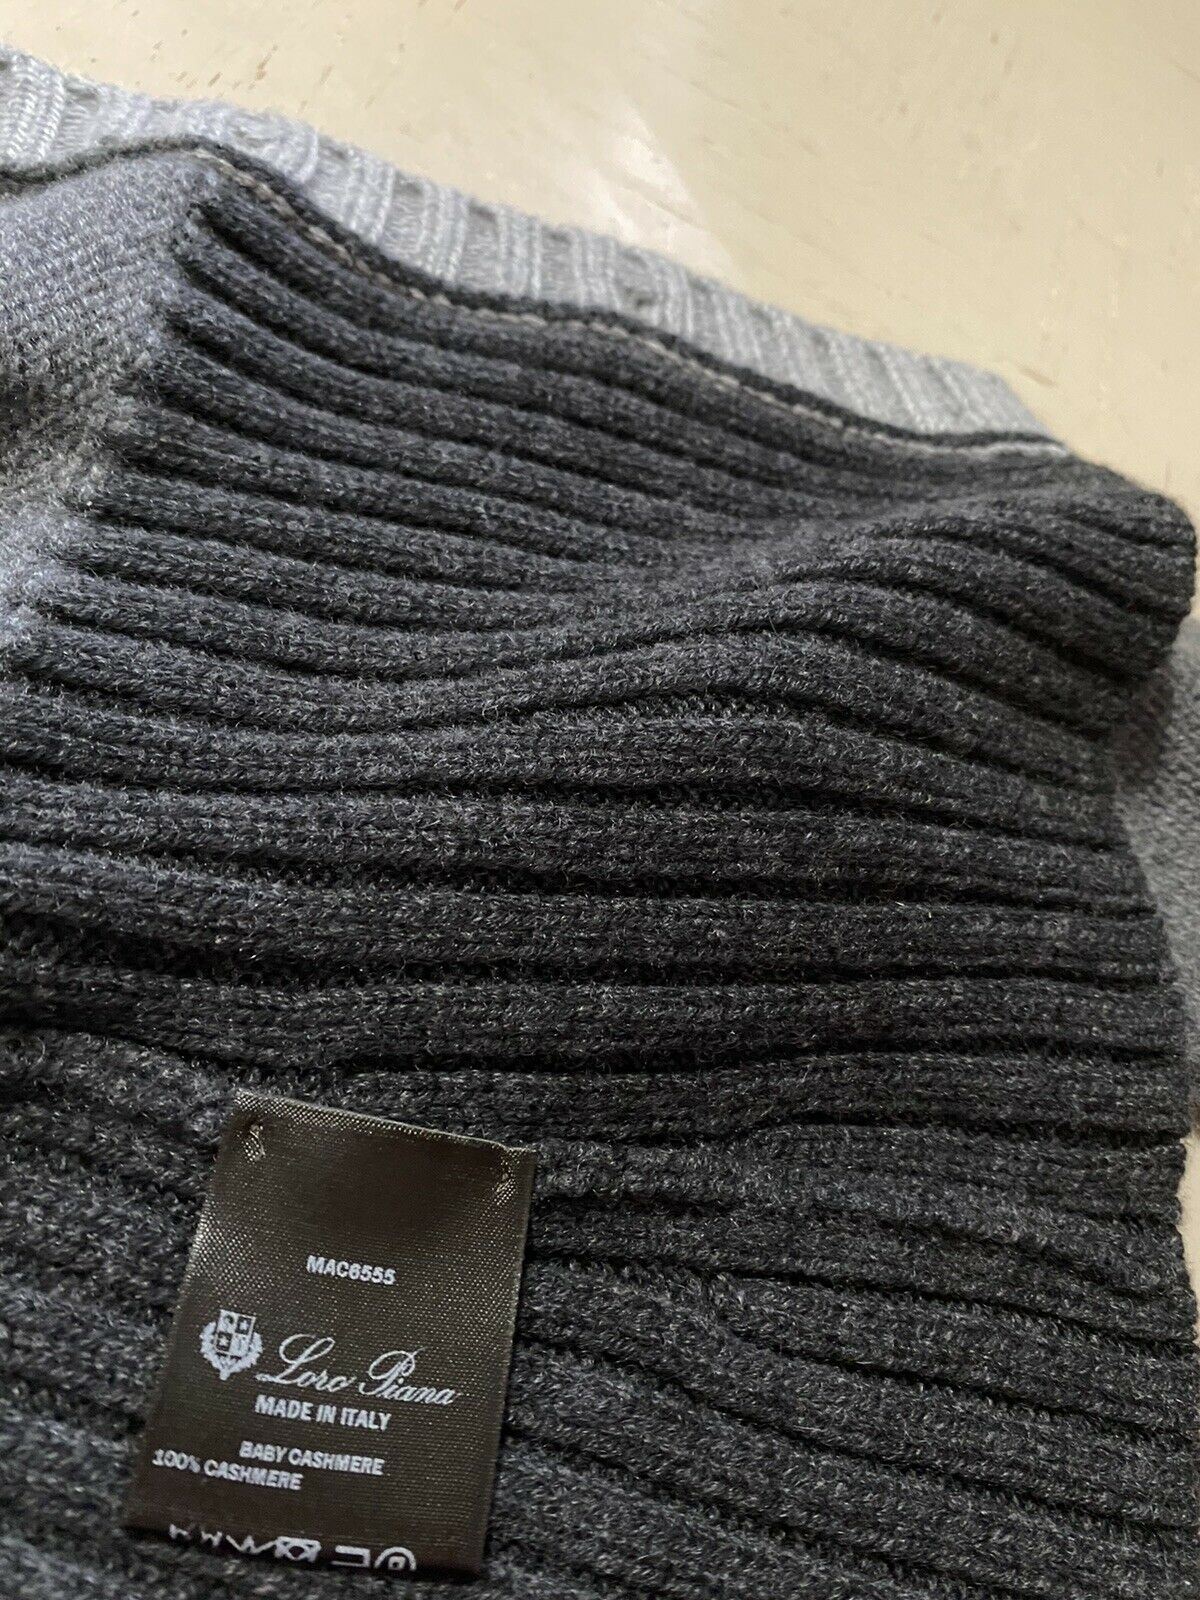 New $1825 Loro Piana Women Wall Street Cashmere Cardigan Sweater DK Gray 40/6